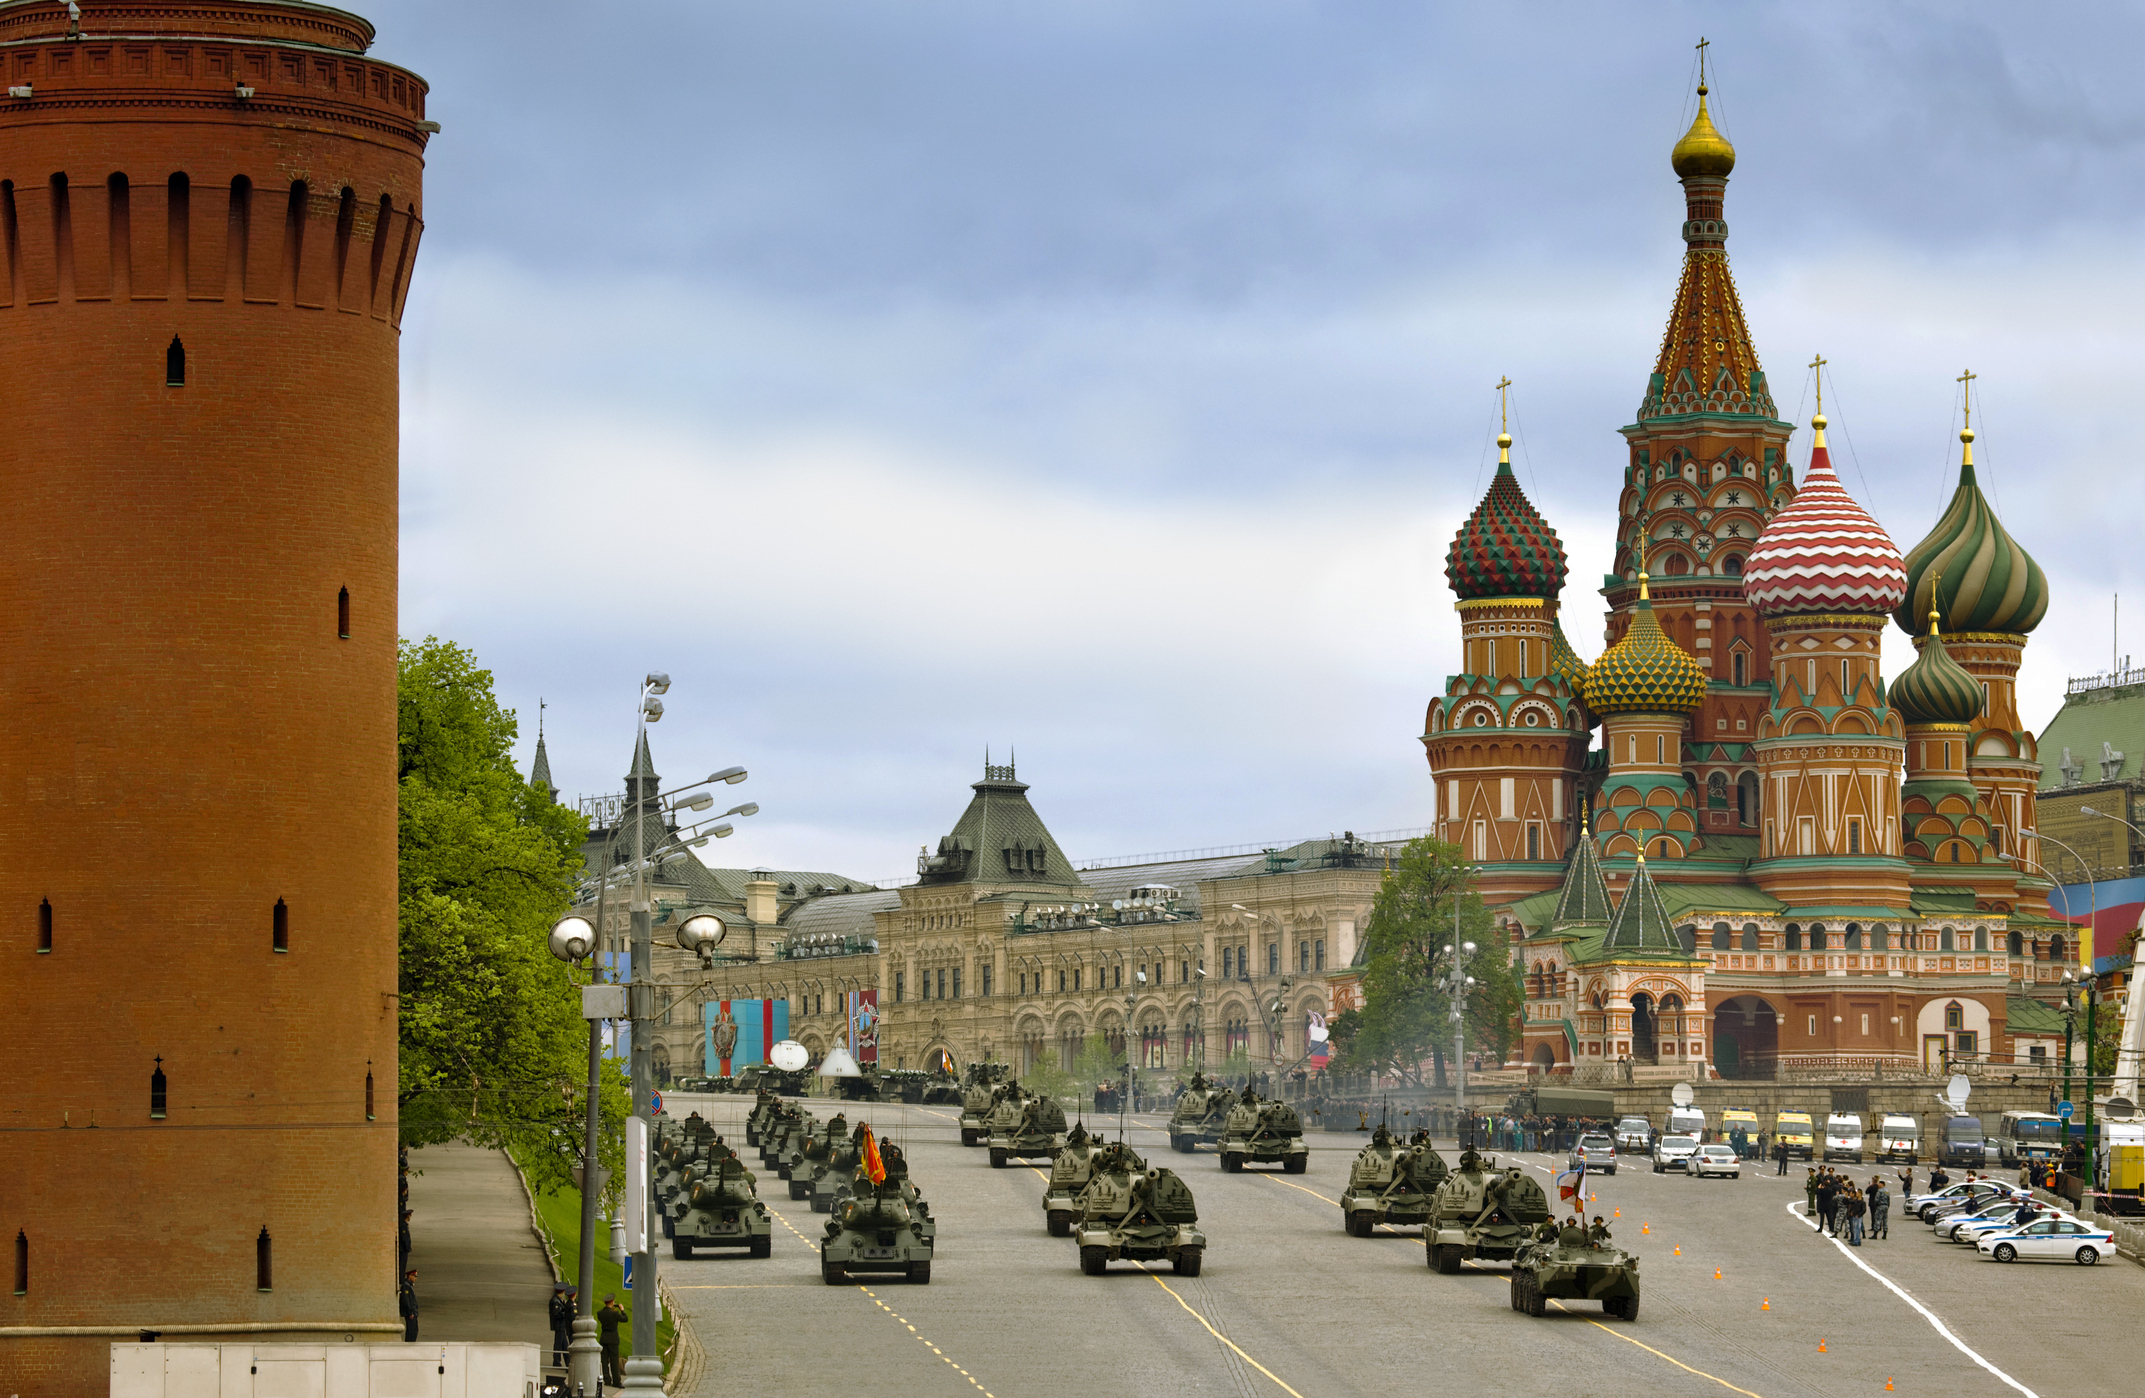 Europe needs massive rearmament to outlast Putin in Ukraine